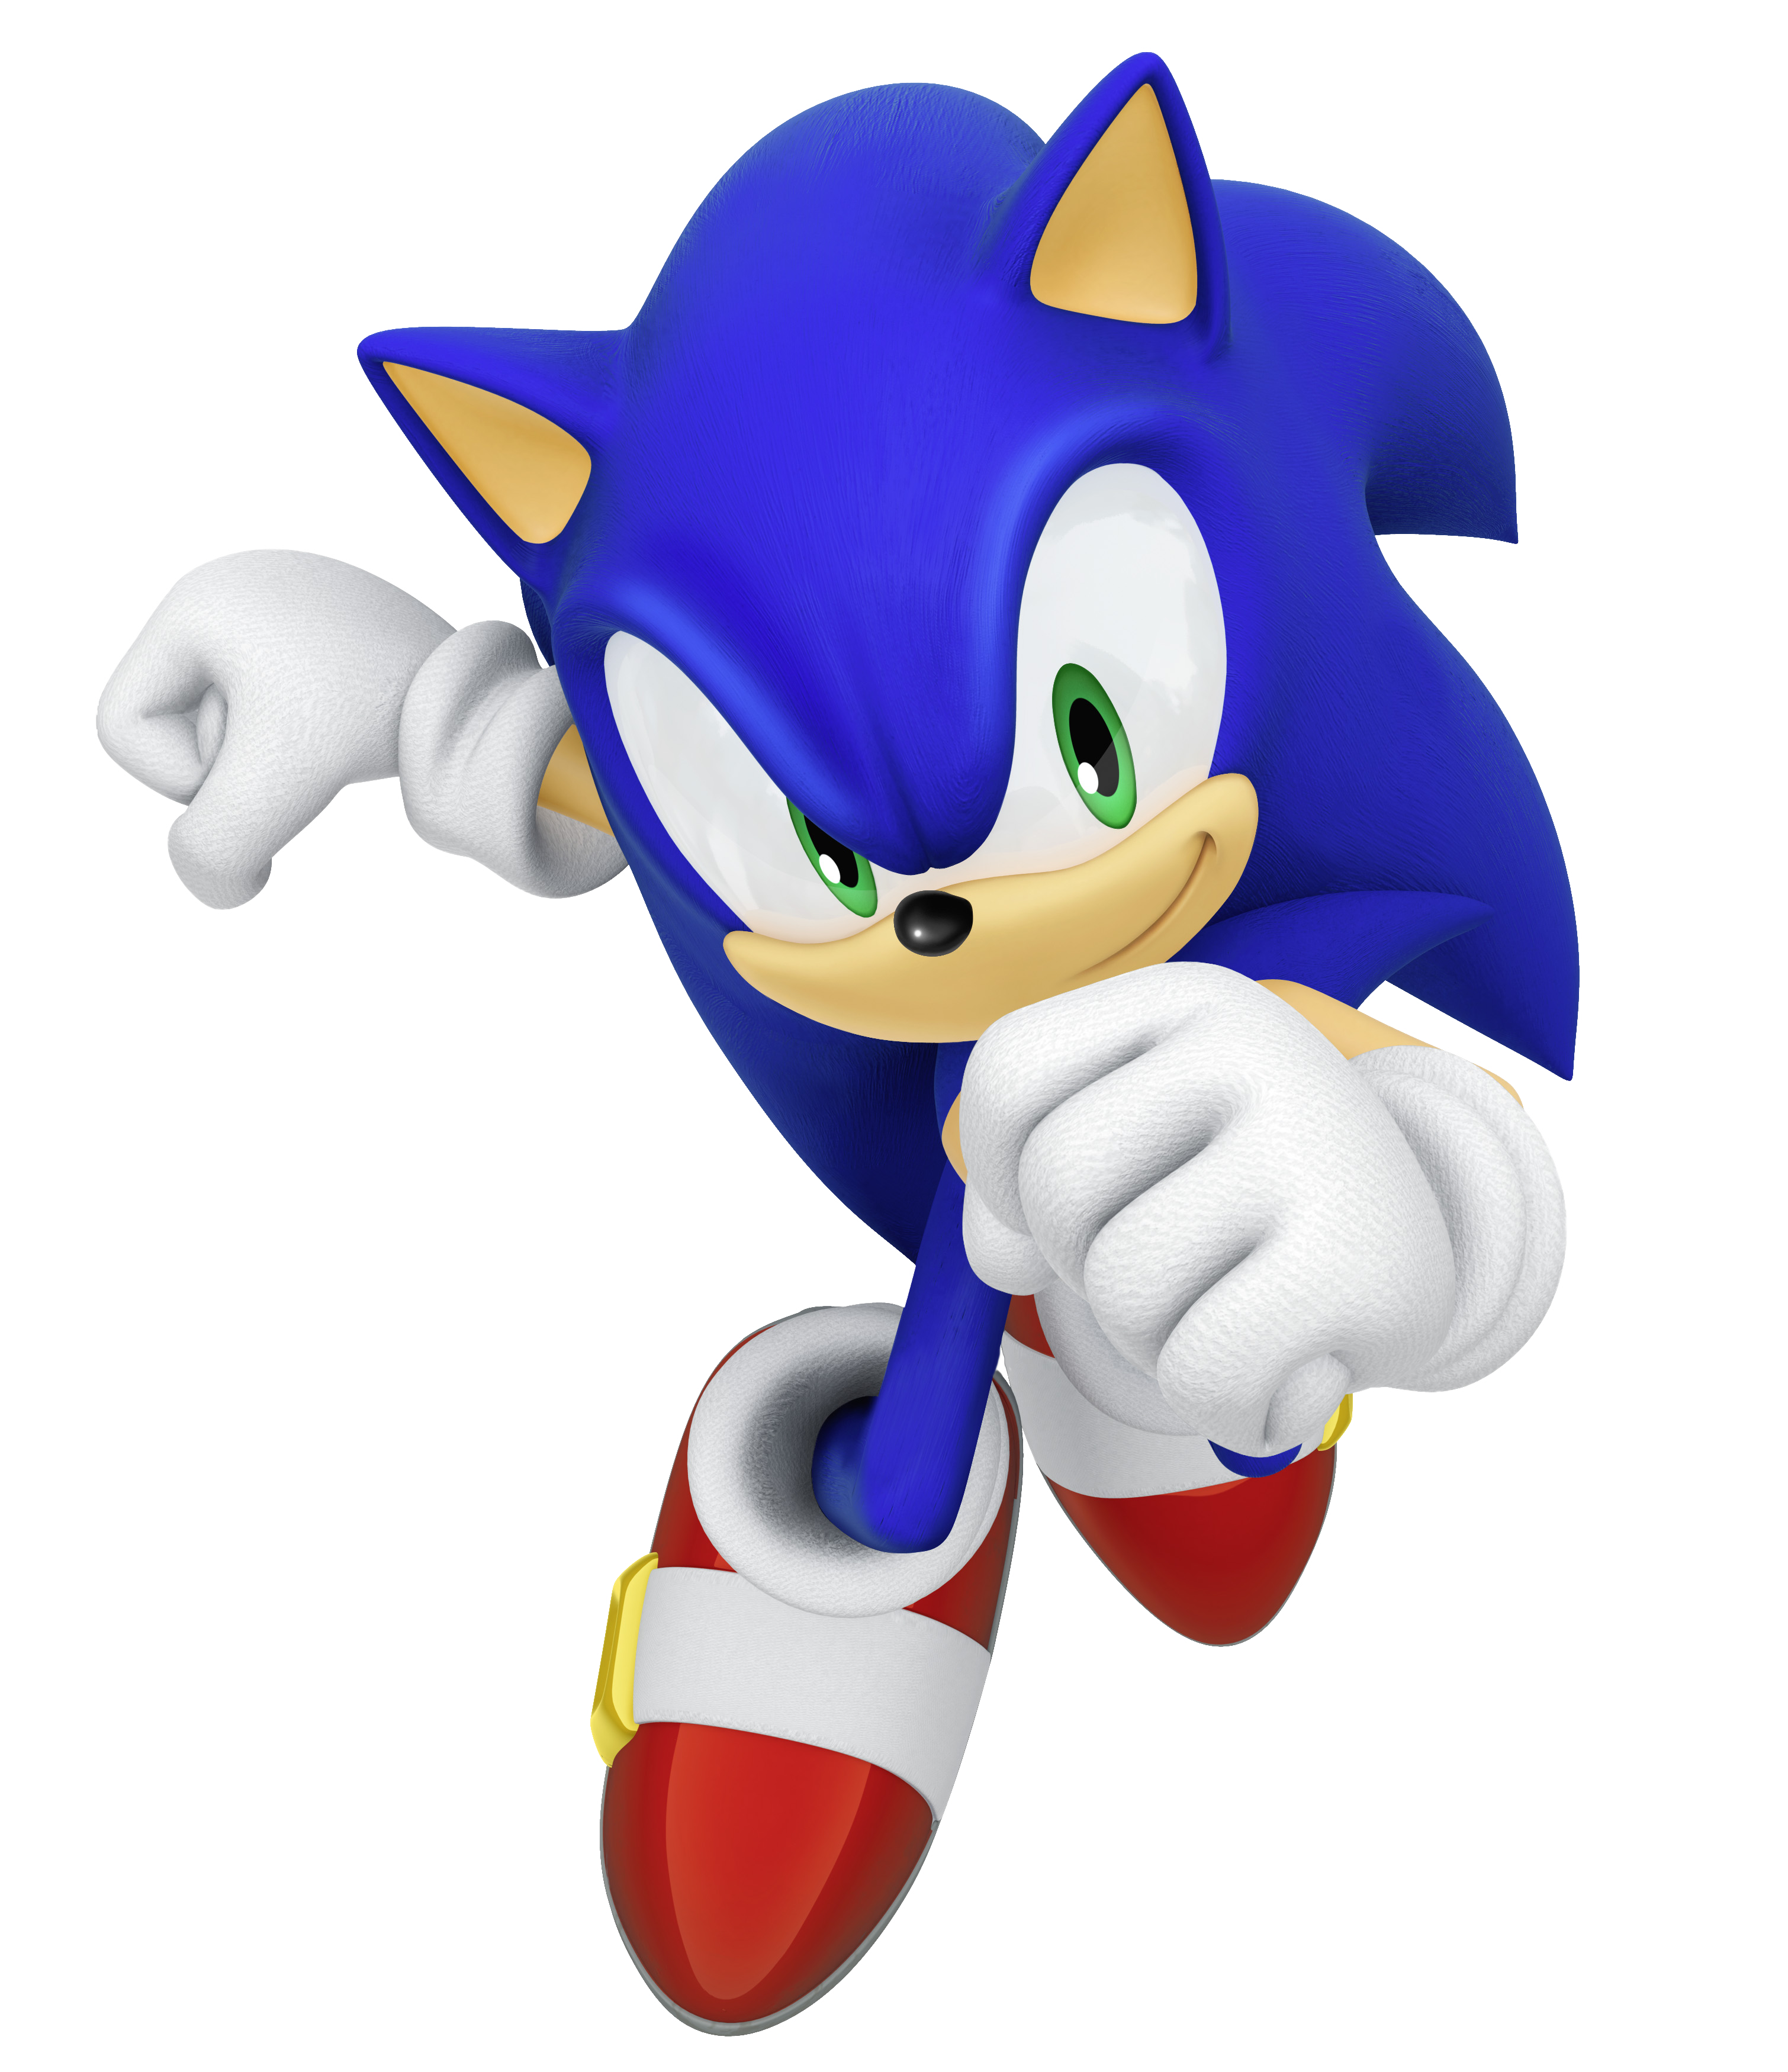 Sonic the Hedgehog transparent image download, size: 1480x3191px